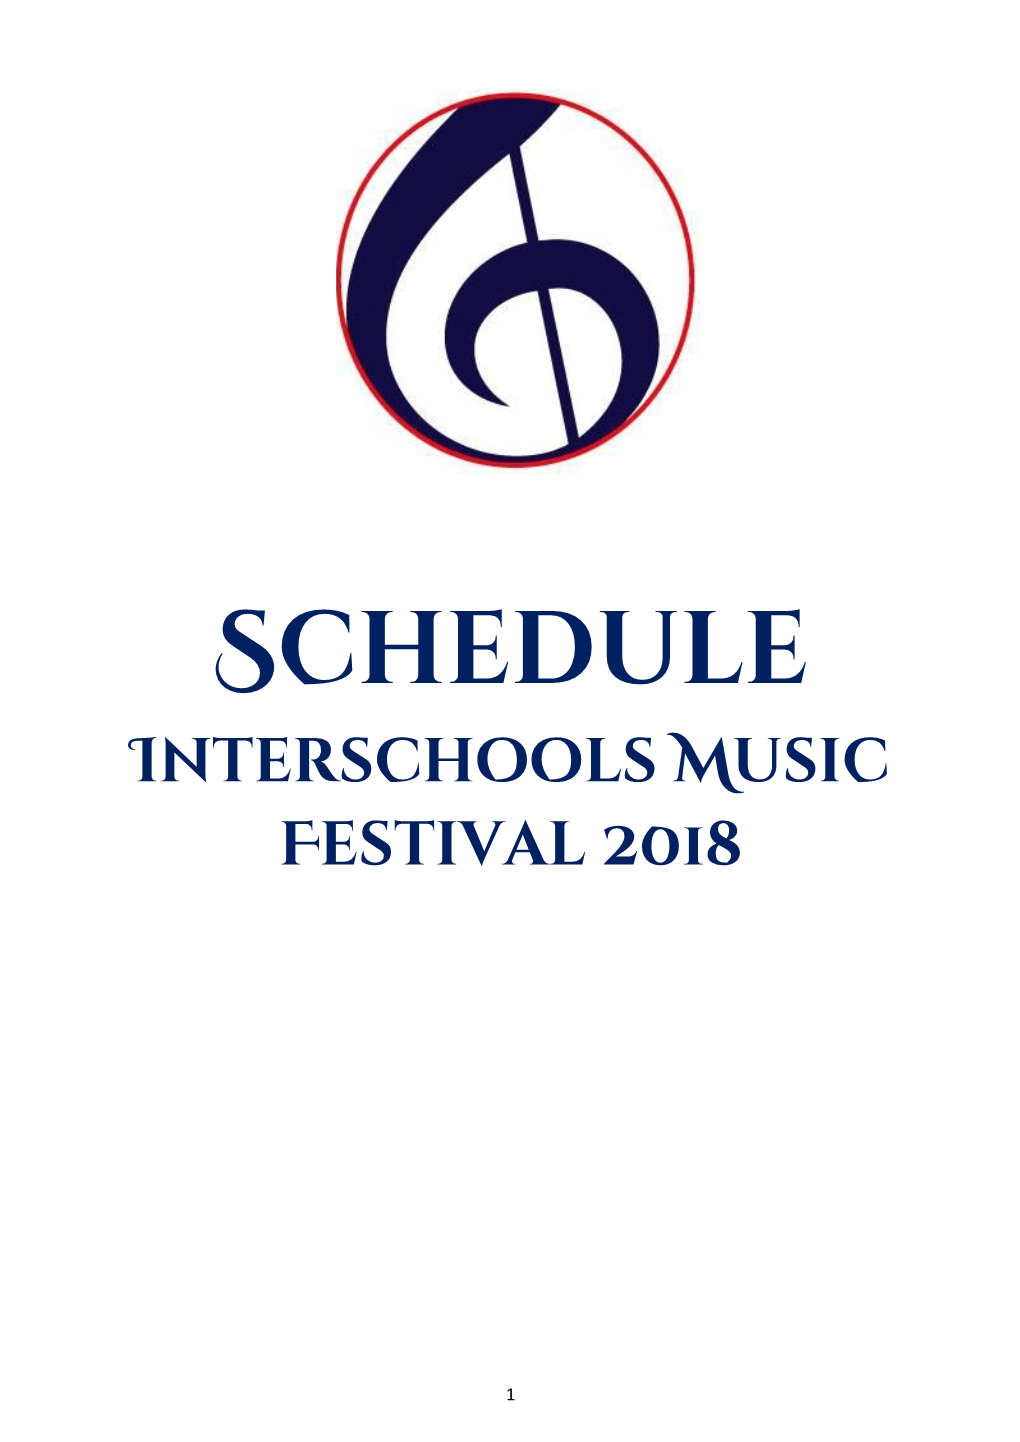 Schedule Interschools Music Festival 2018